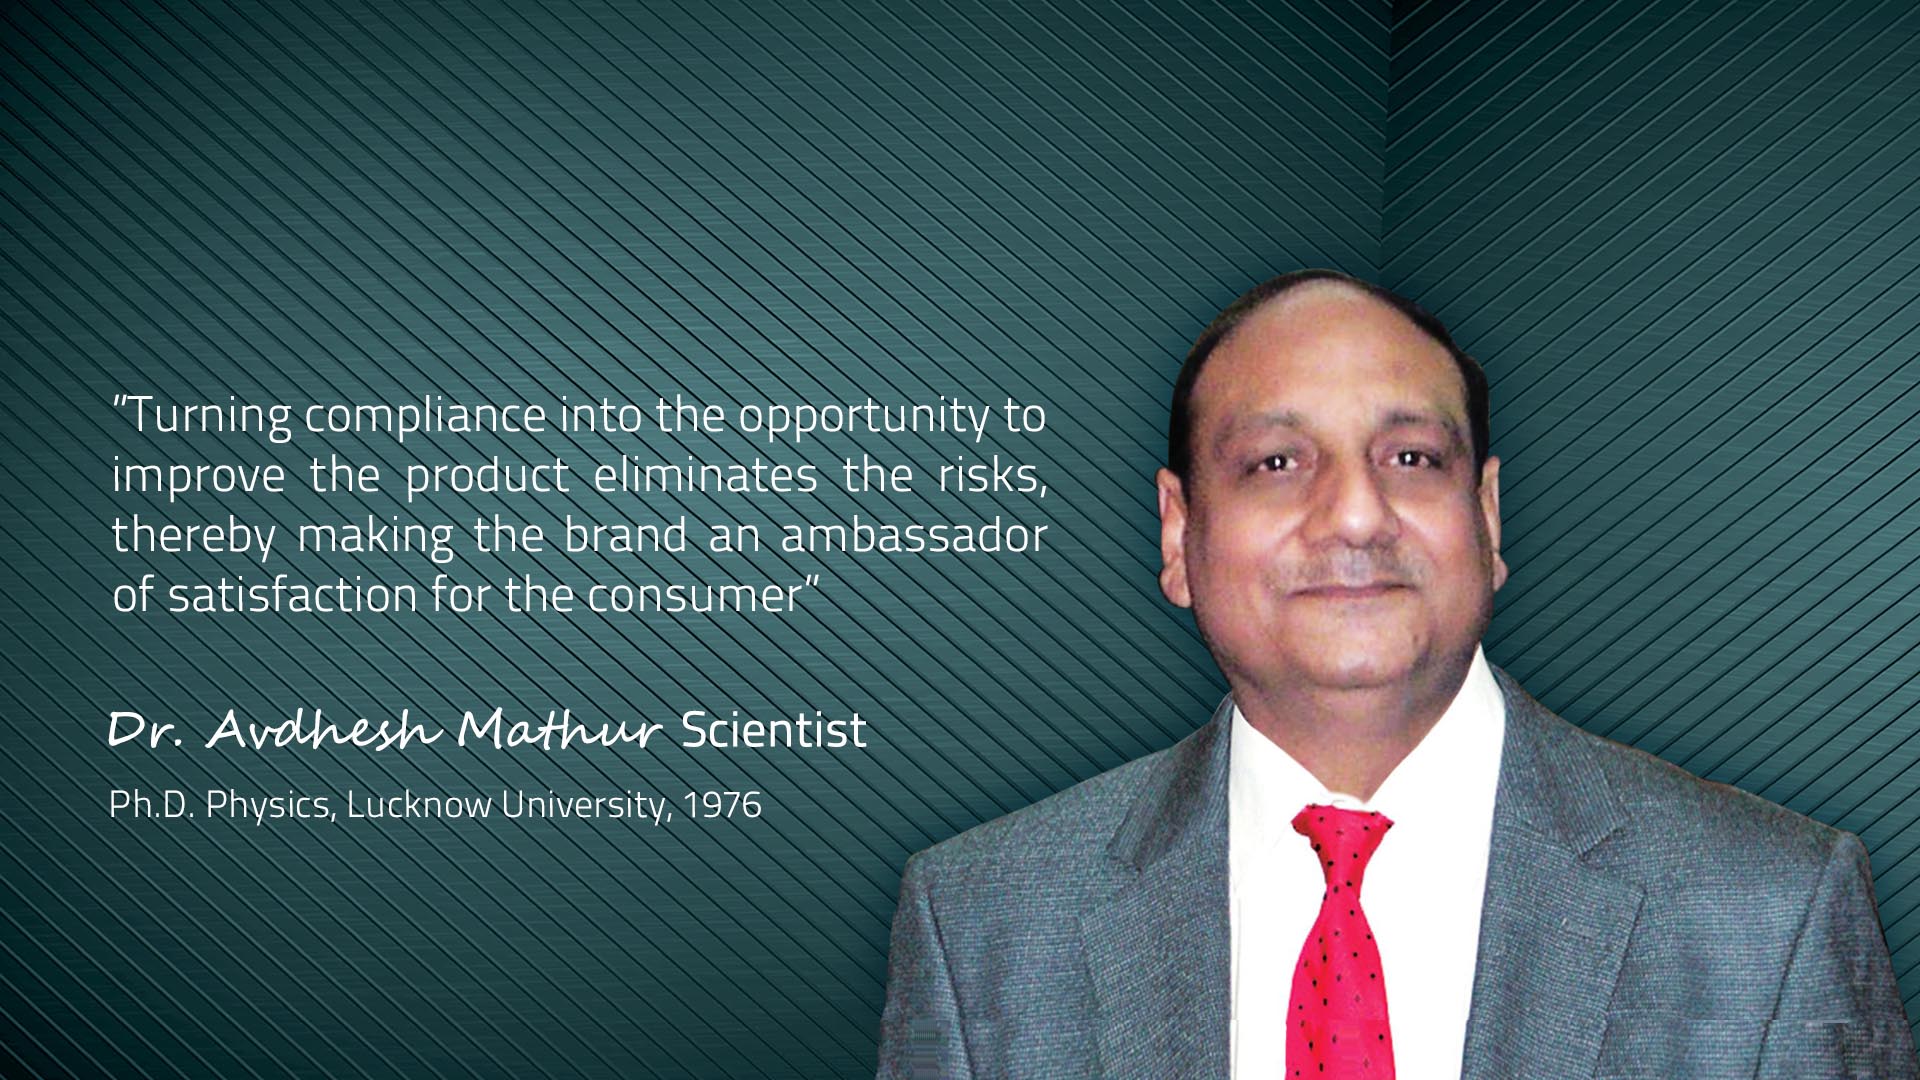 Dr. Avdhesh Mathur Scientist | The Mobile Association